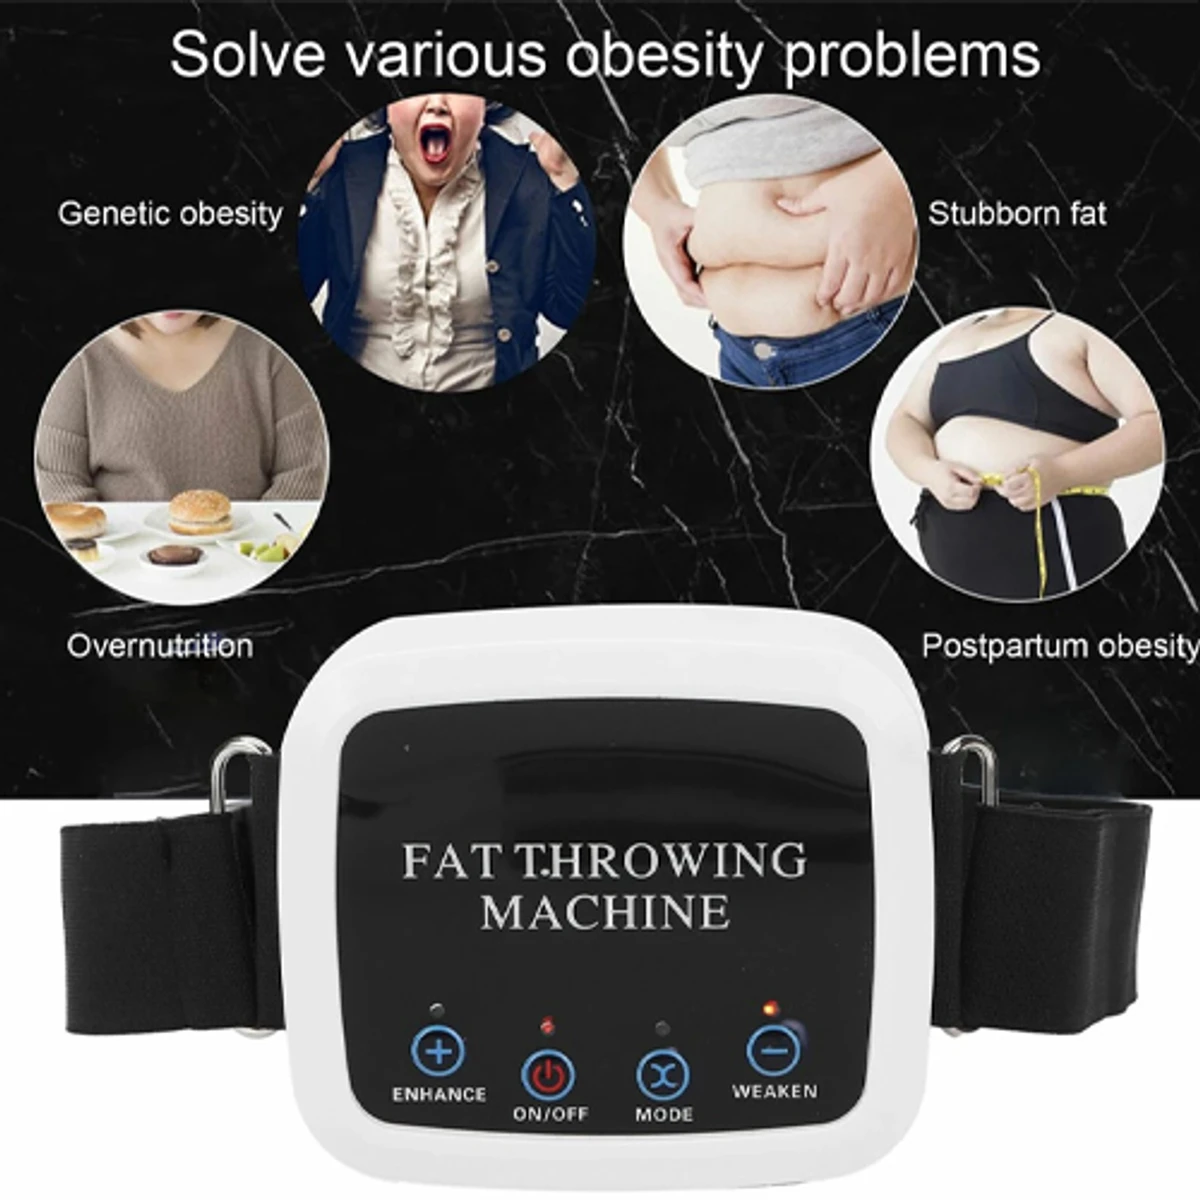 FAT THROWING MACHINE